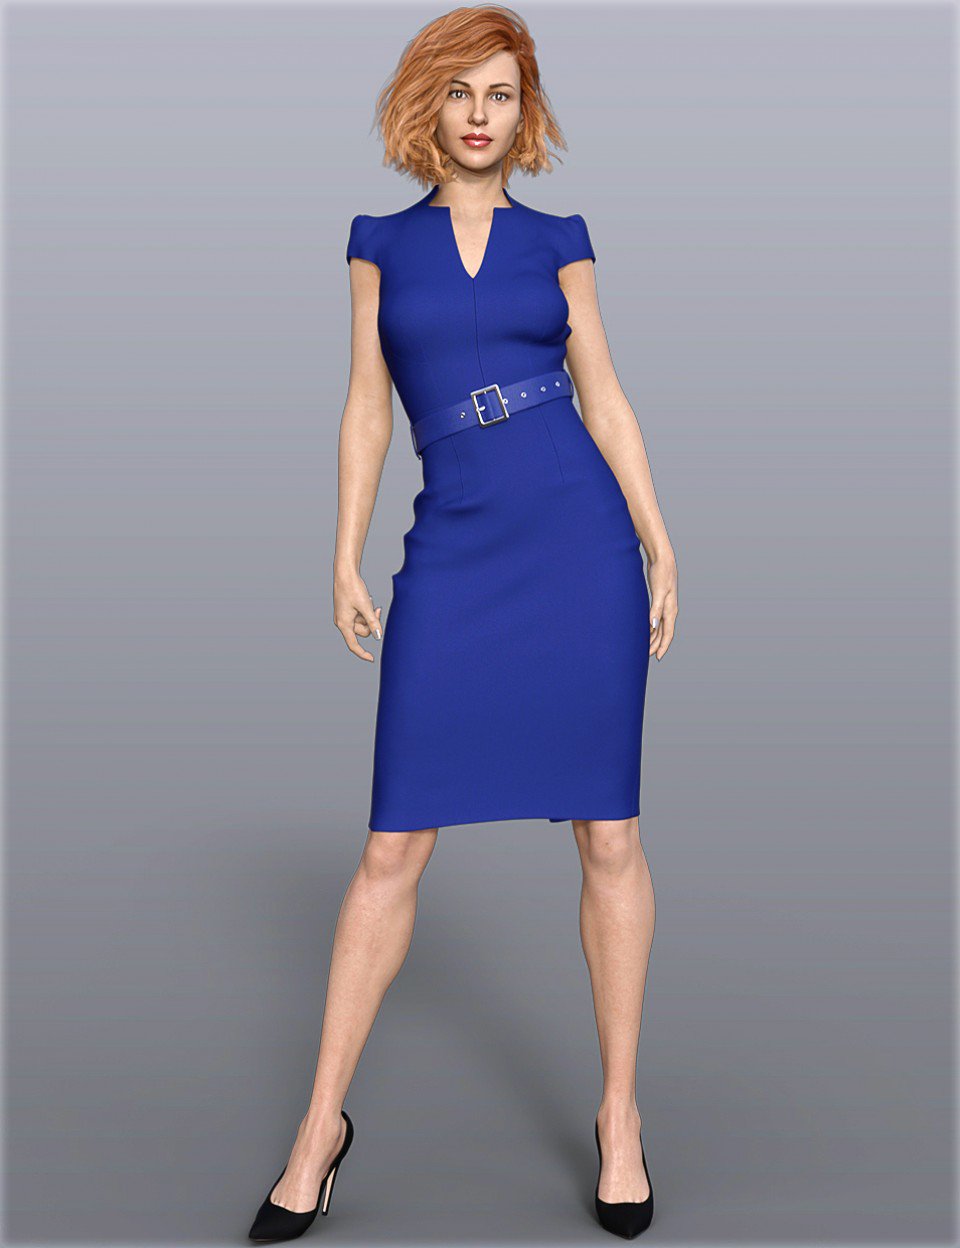 Daz Studio 3D Dforce Petite Style Soft Salopette and Sketch Set for Genesis 8 Females Model